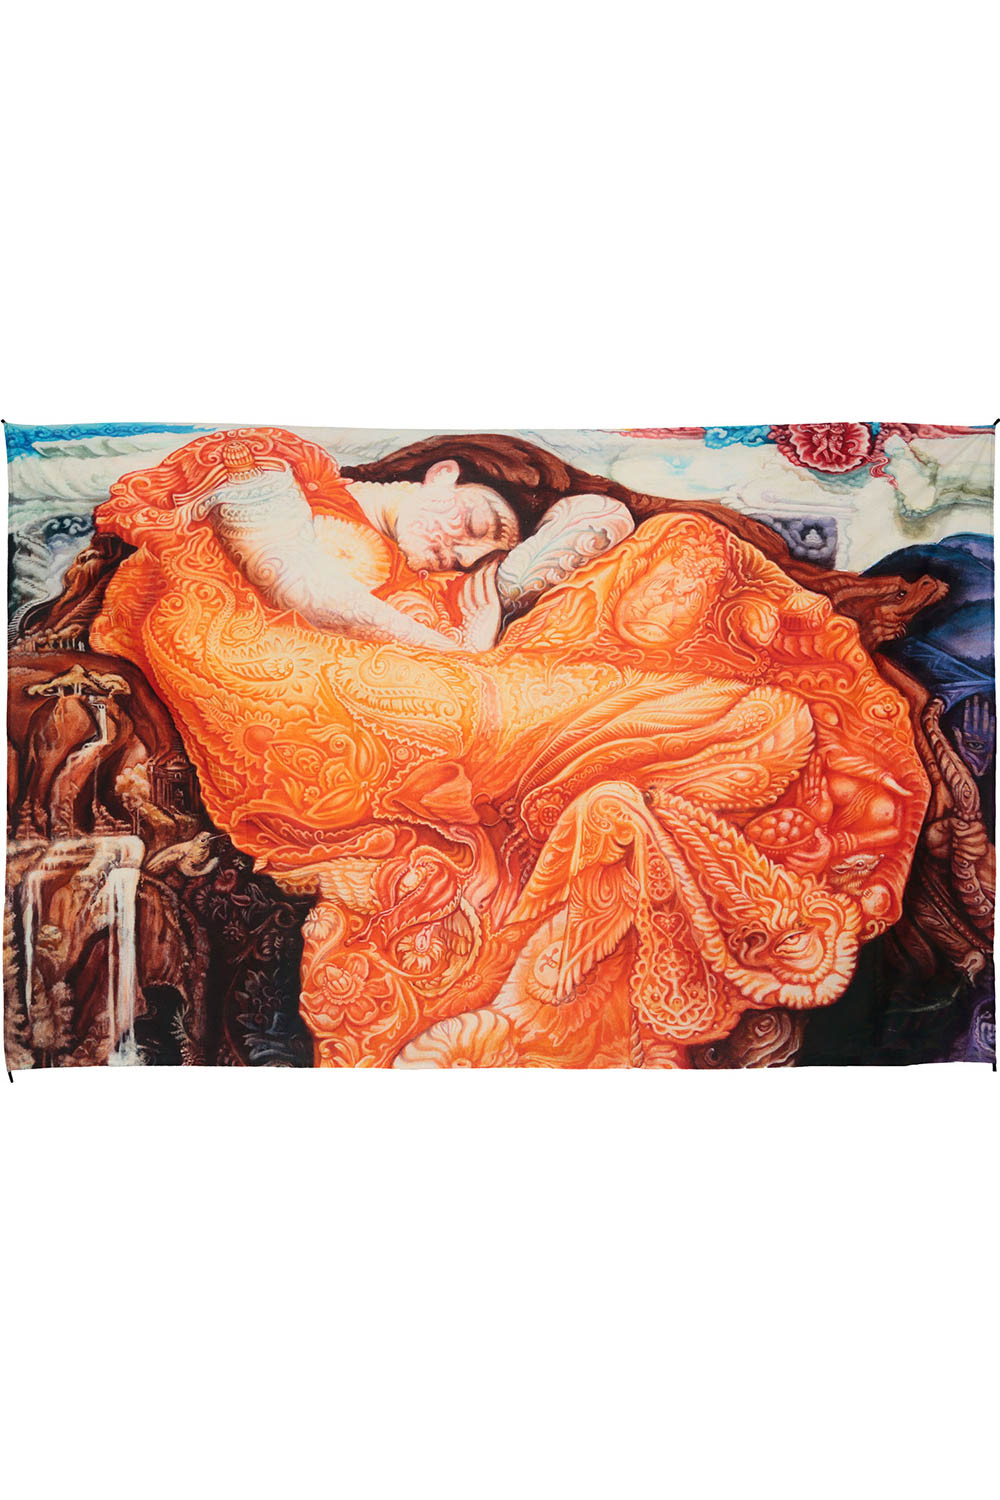 Flaming Heady Art Print Tapestry 53x85 - Artwork by Randal Roberts 